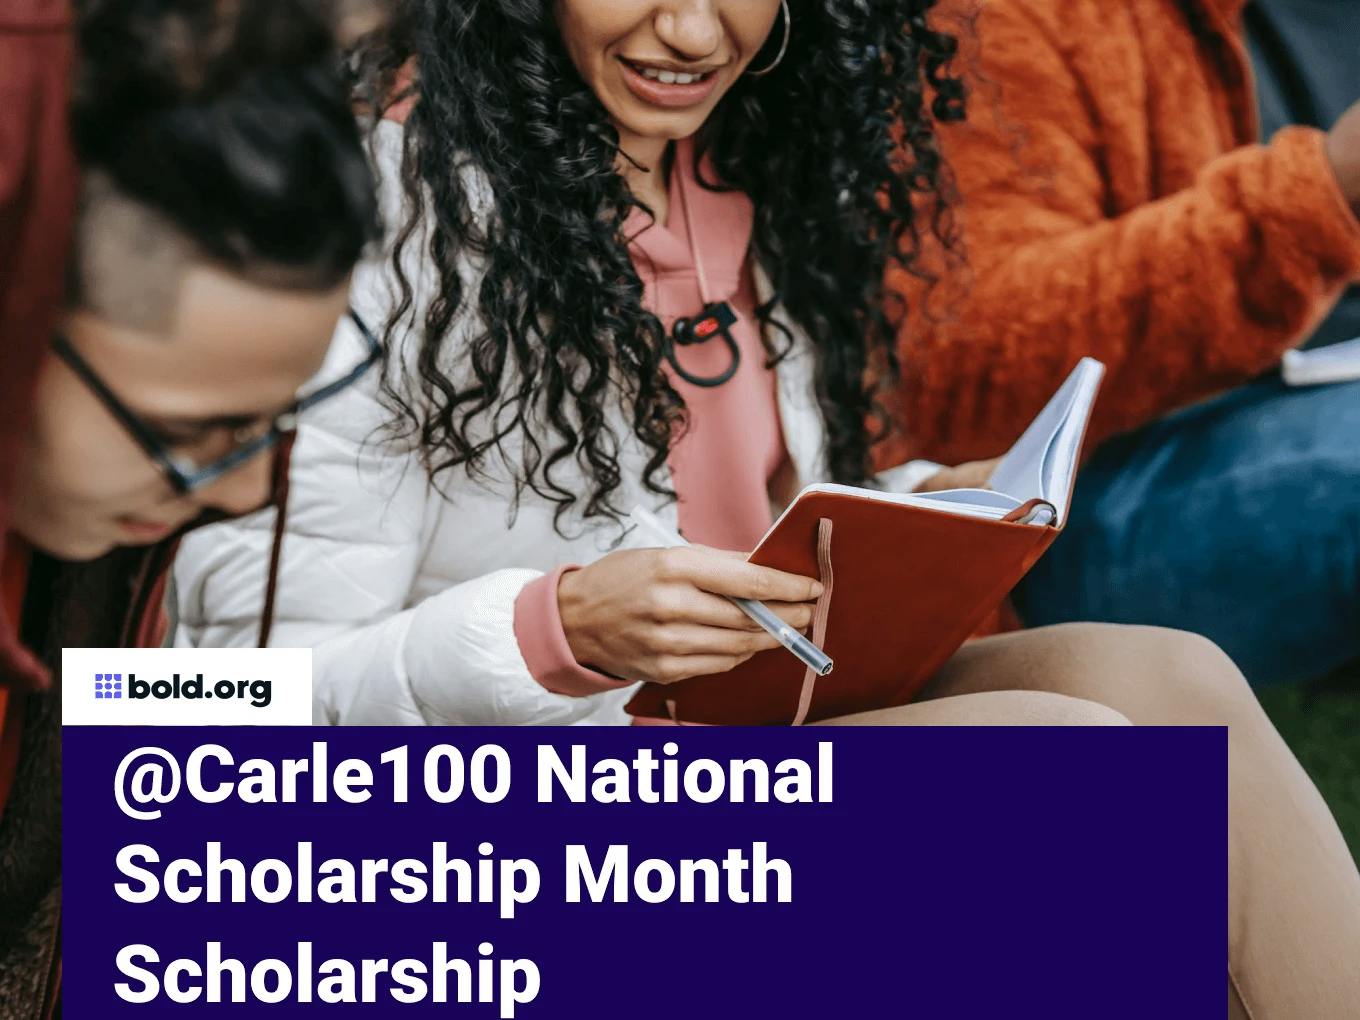 @Carle100 National Scholarship Month Scholarship